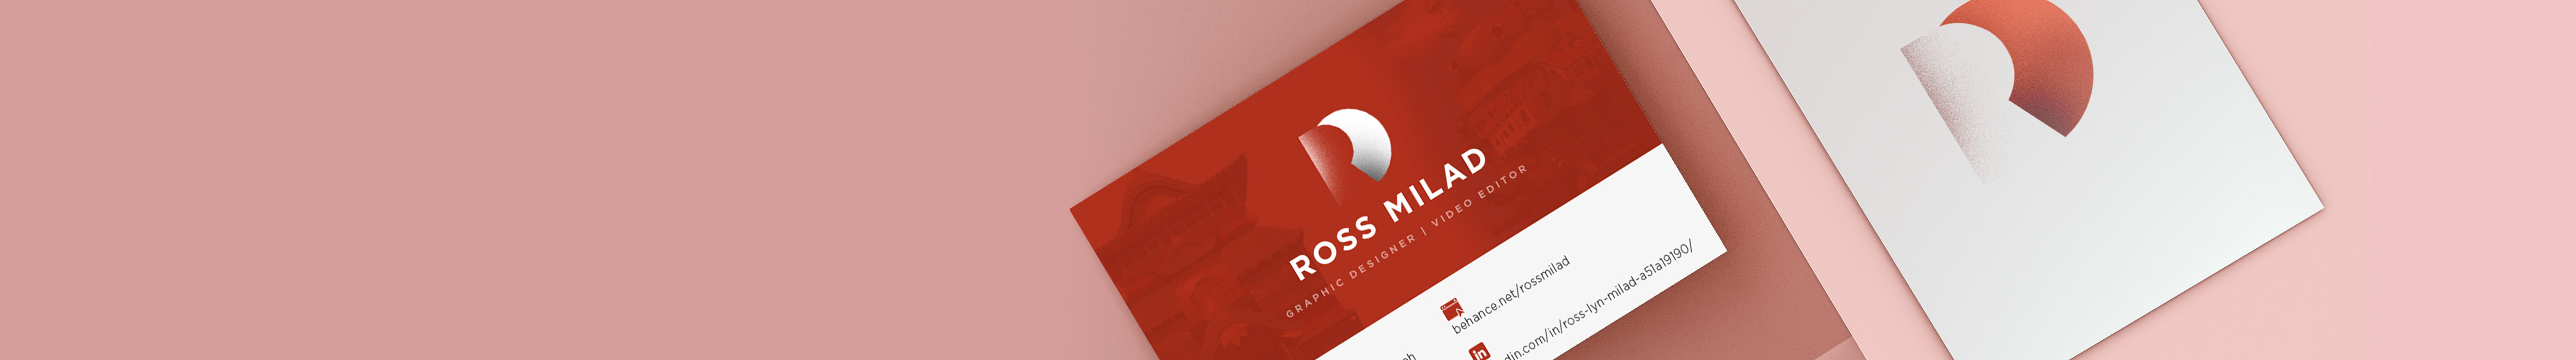 Ross-lyn Milad's profile banner